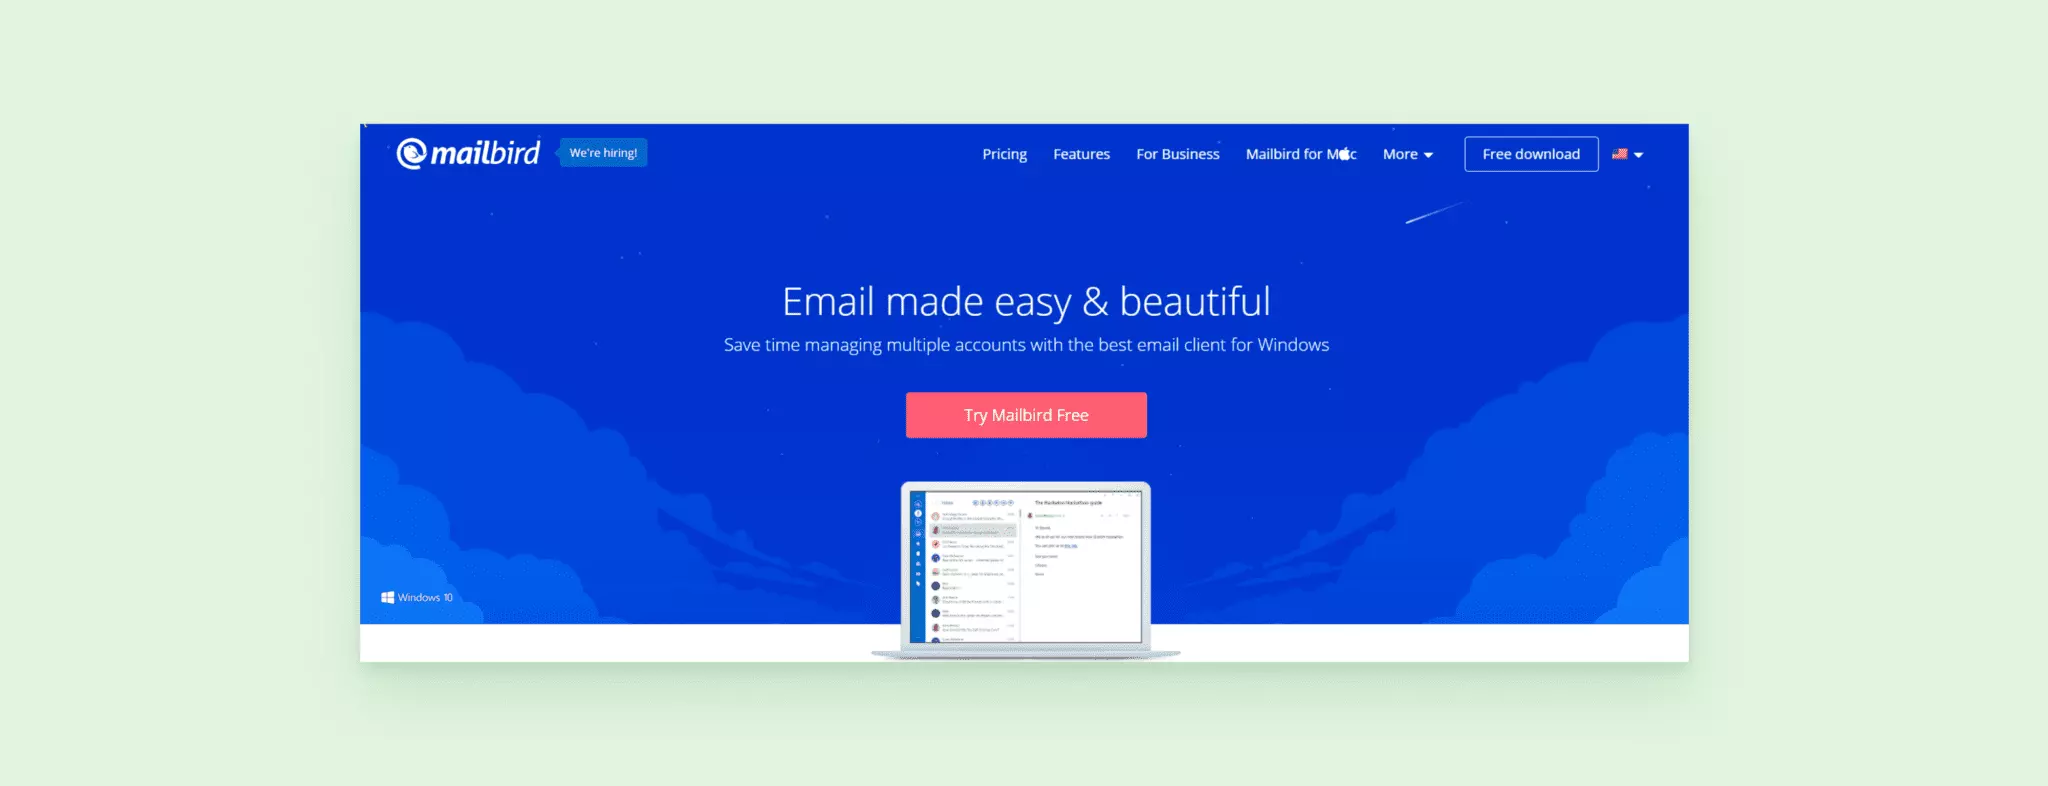 Mailbird email client